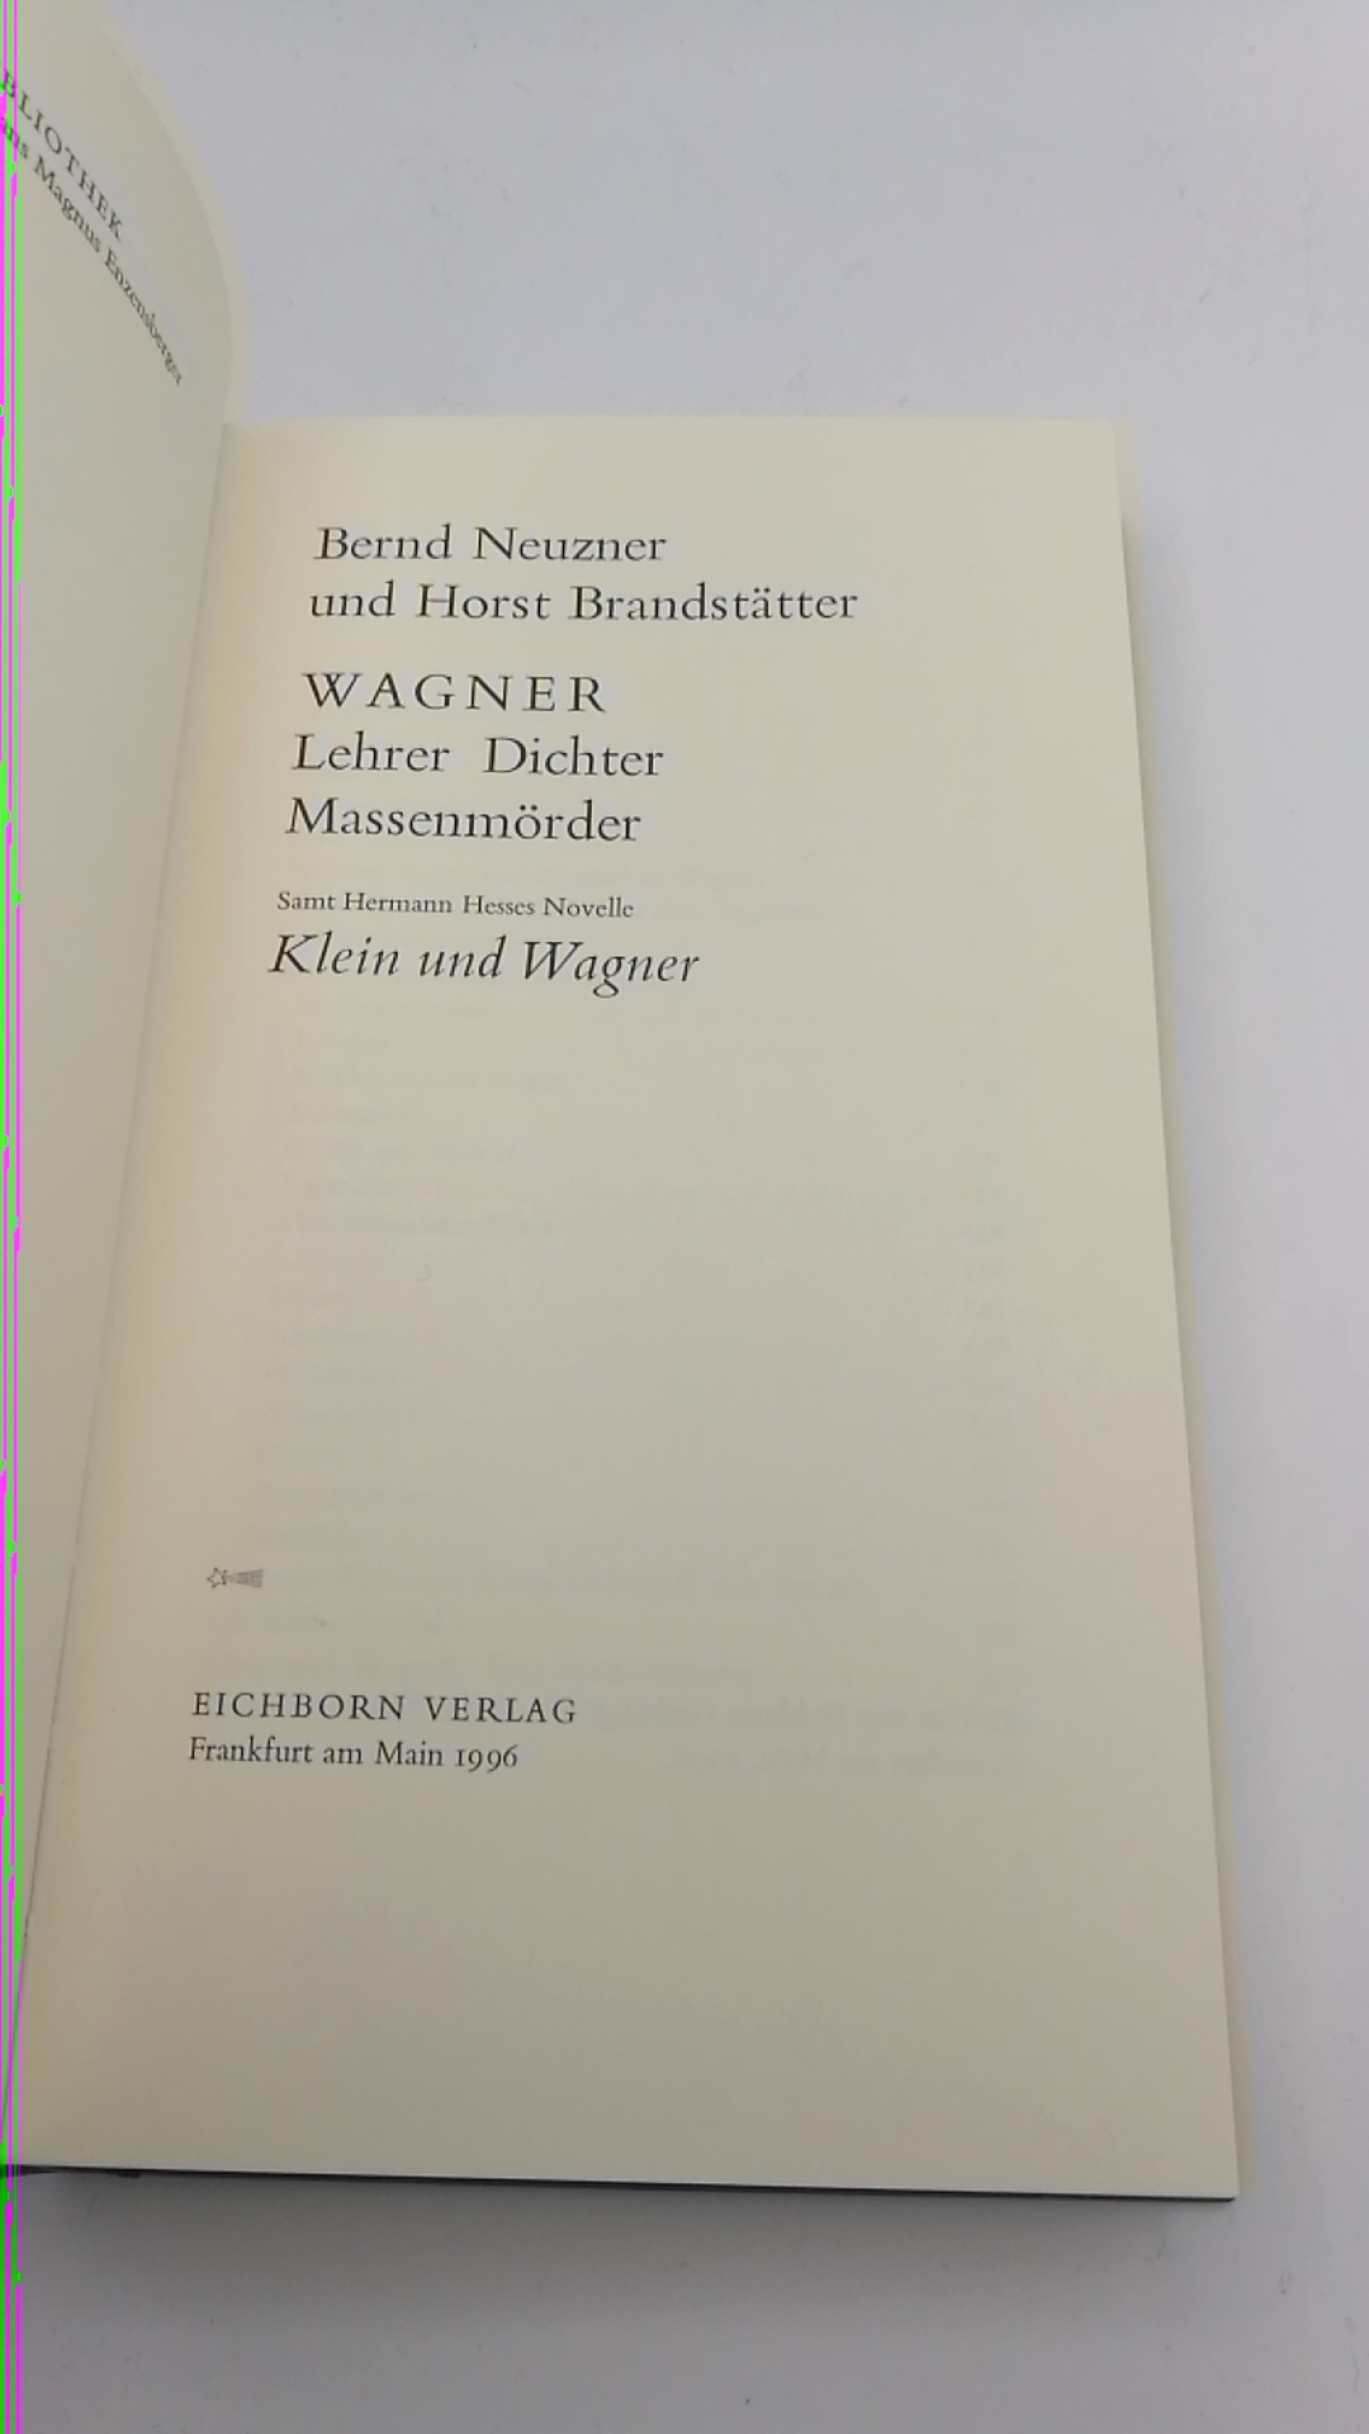 Neuzer / Brandstätter, Bernd / Horst: Wagner Lehrer. Dichter. Massenmörder.